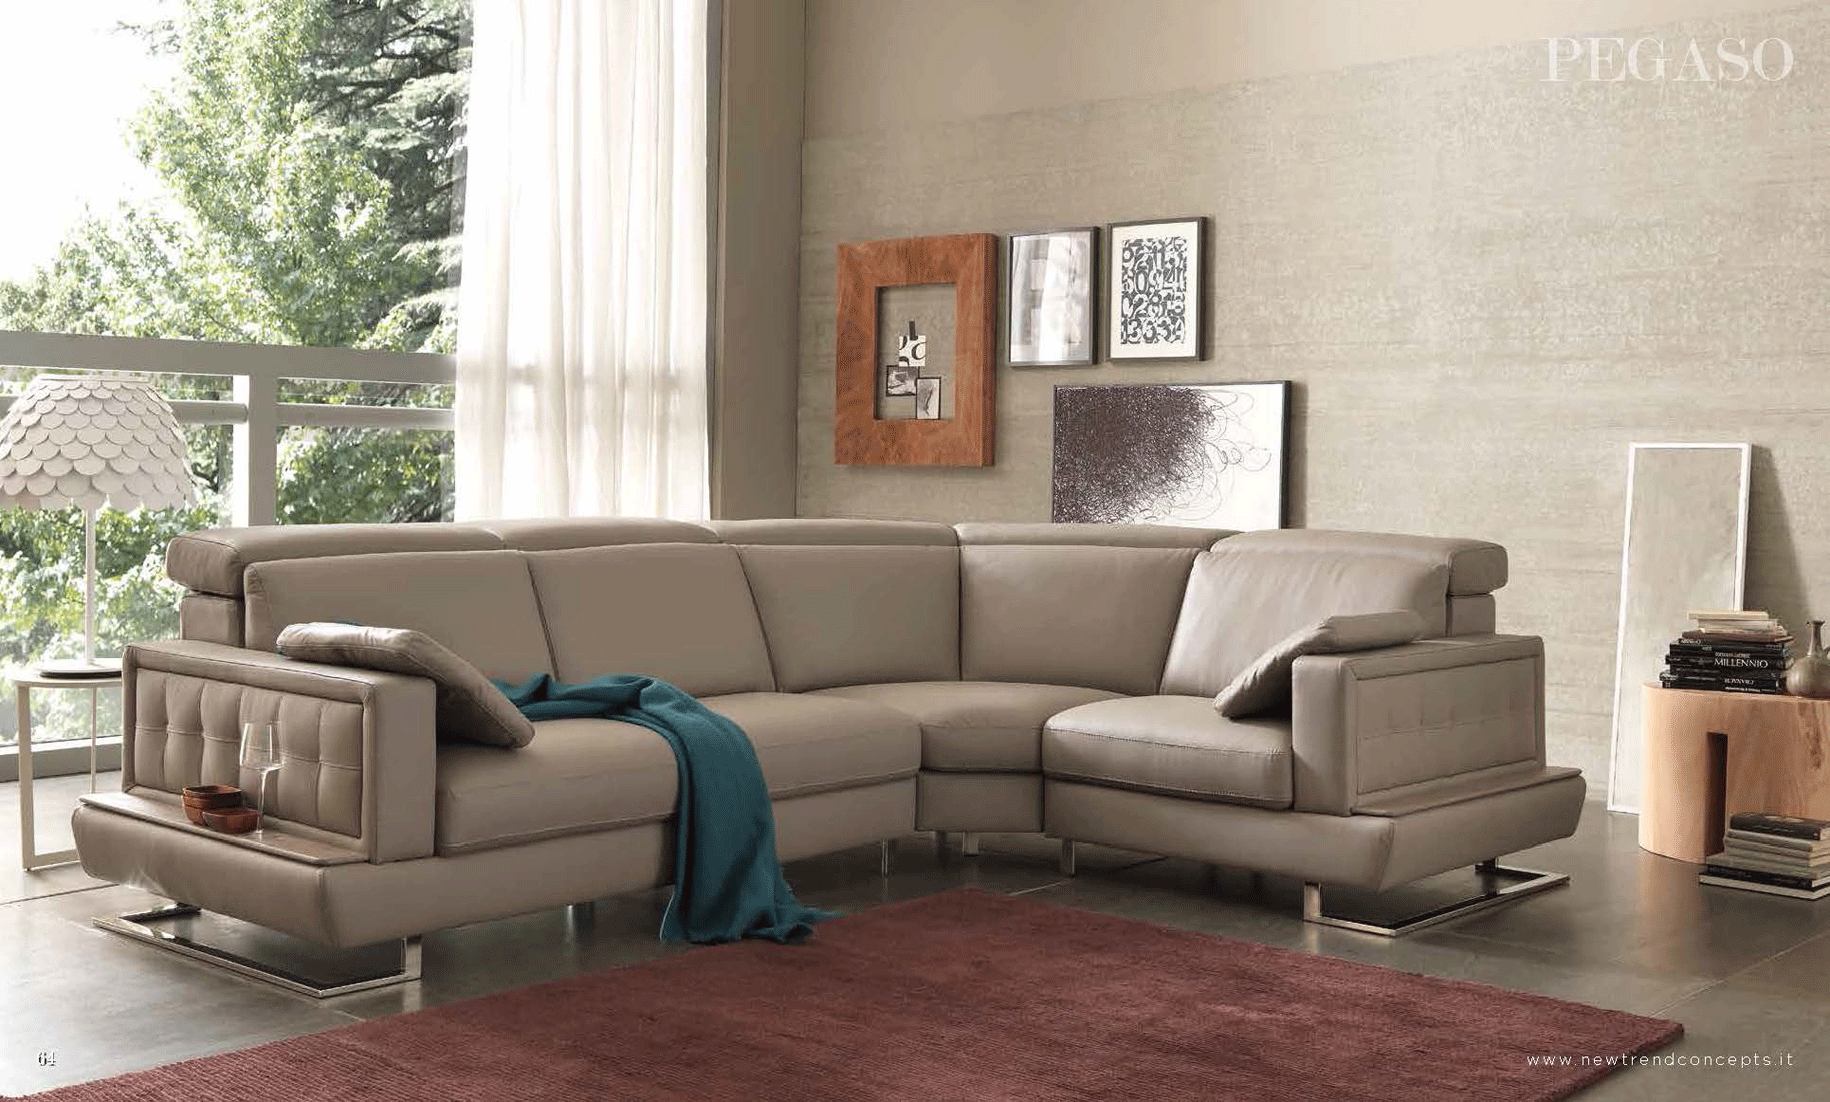 Living Room Furniture Reclining and Sliding Seats Sets Pegaso